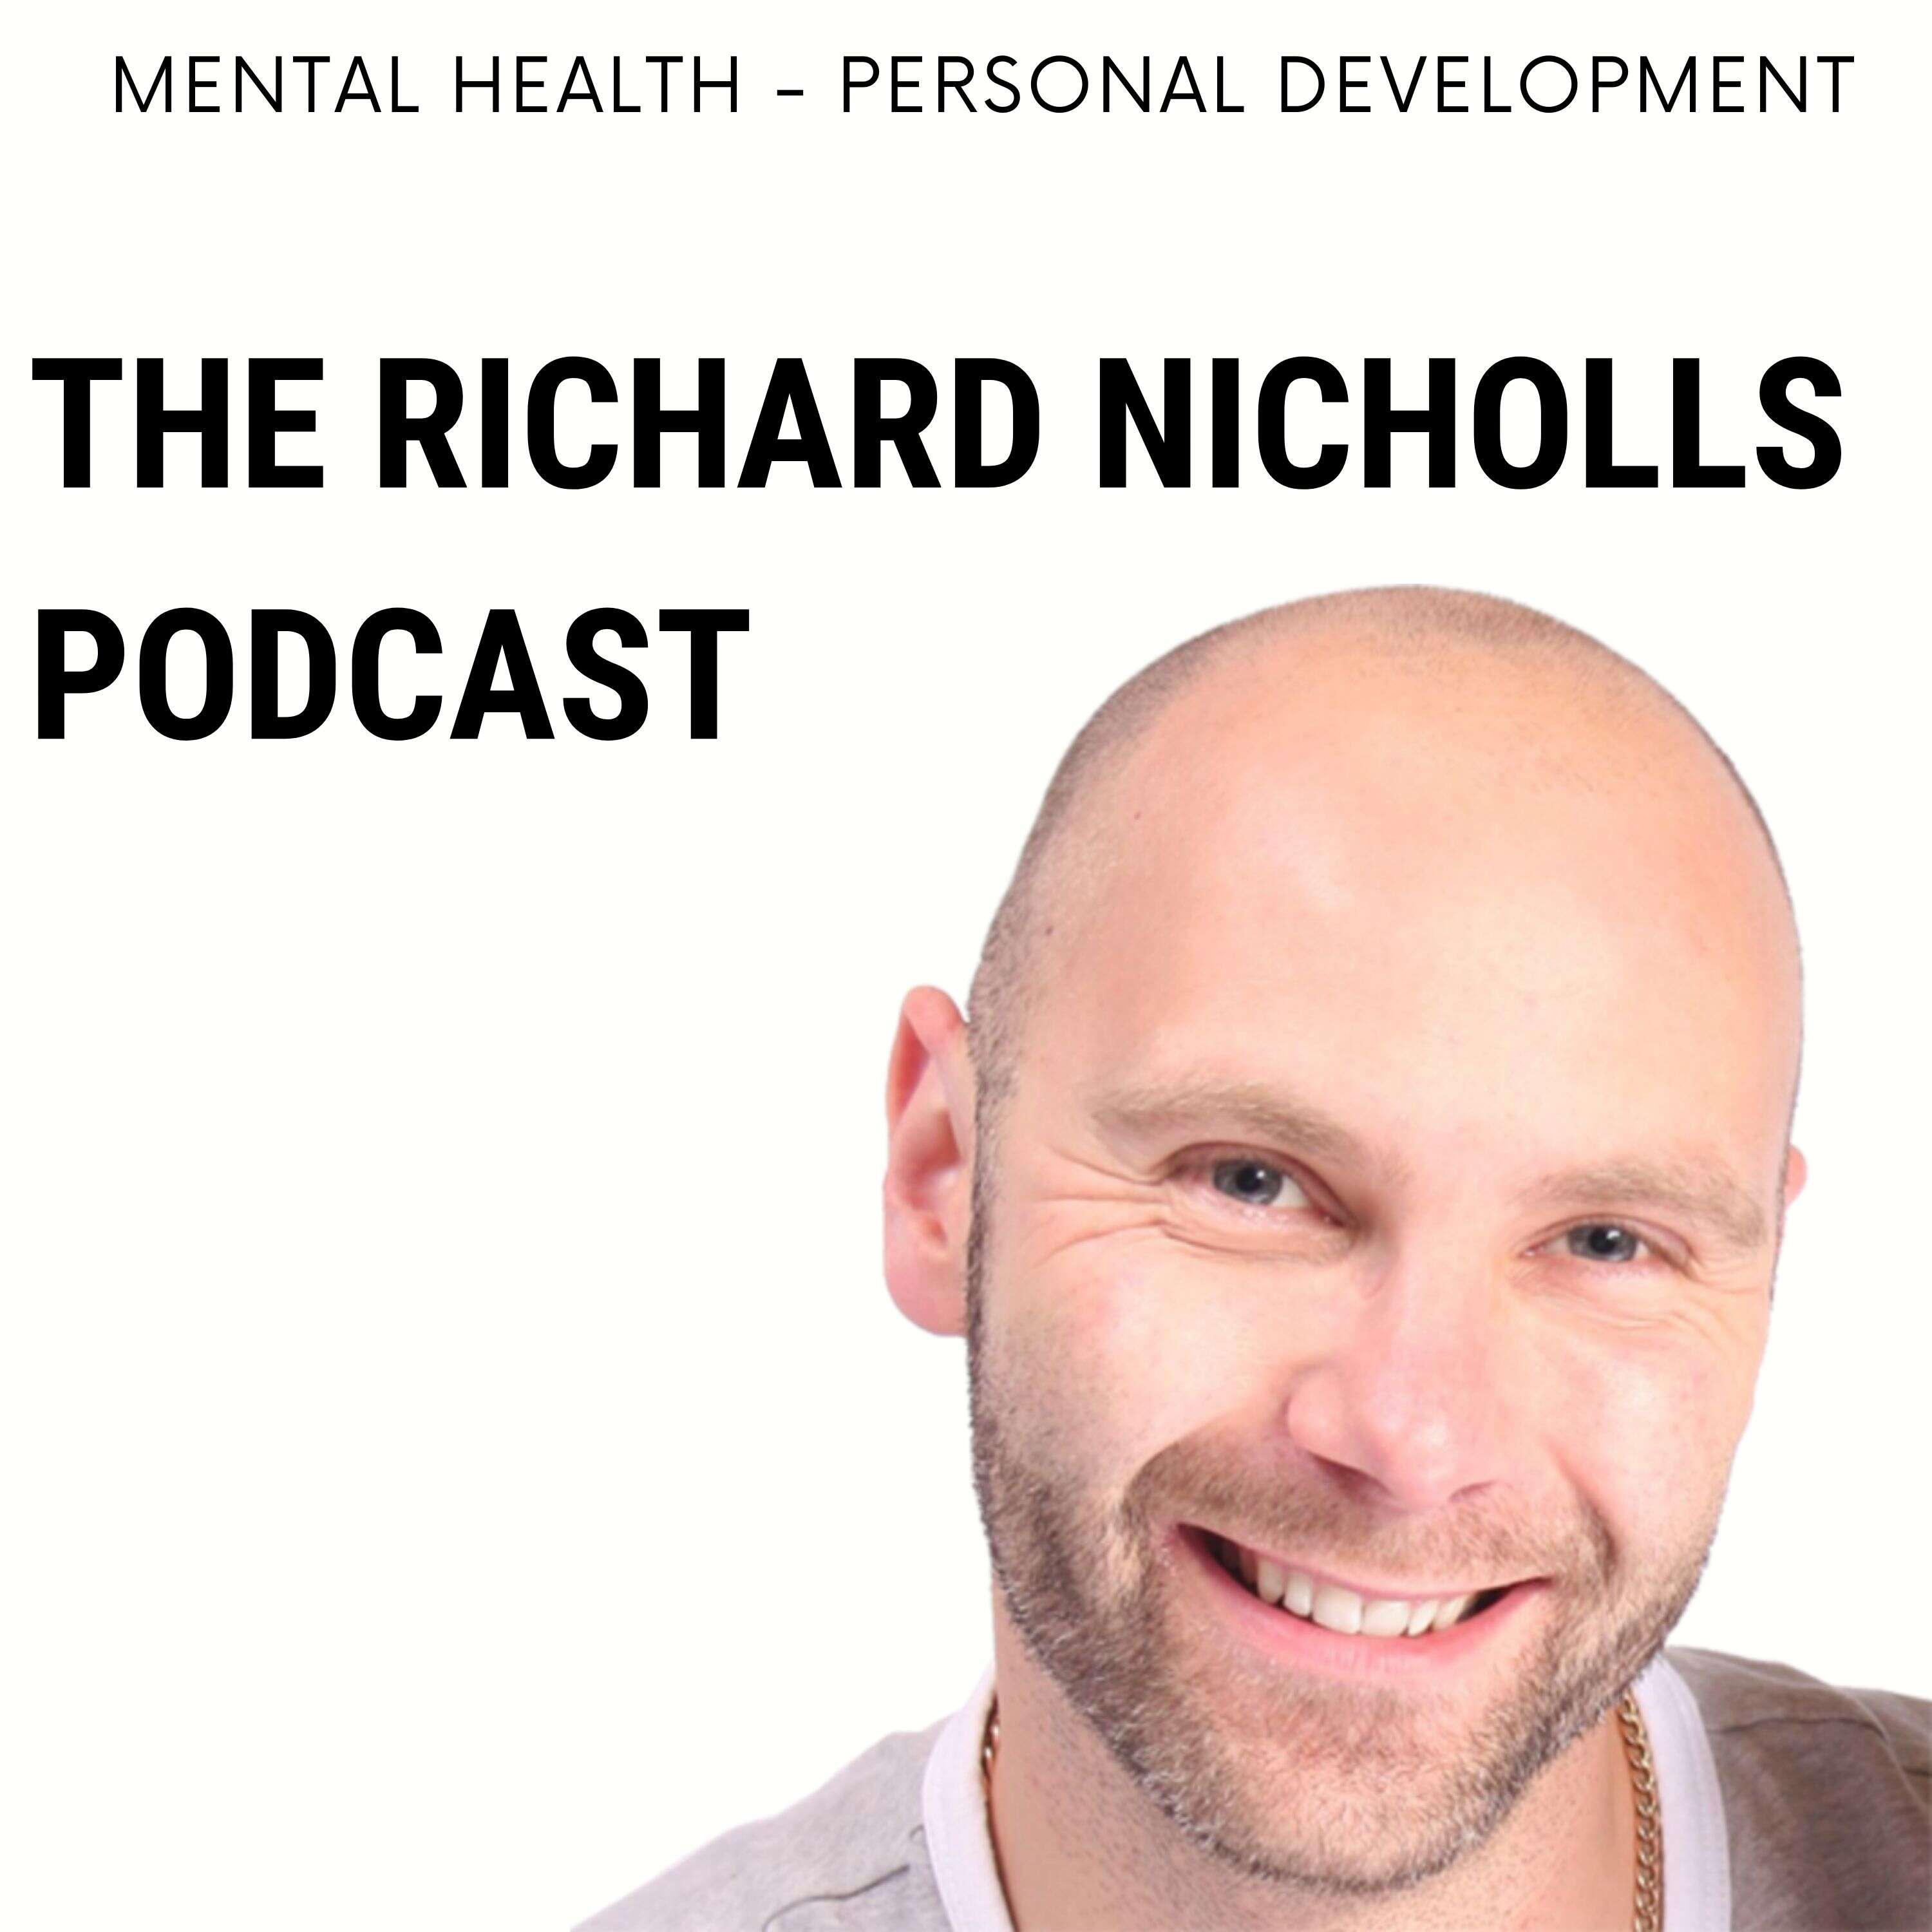 The Richard Nicholls Podcast